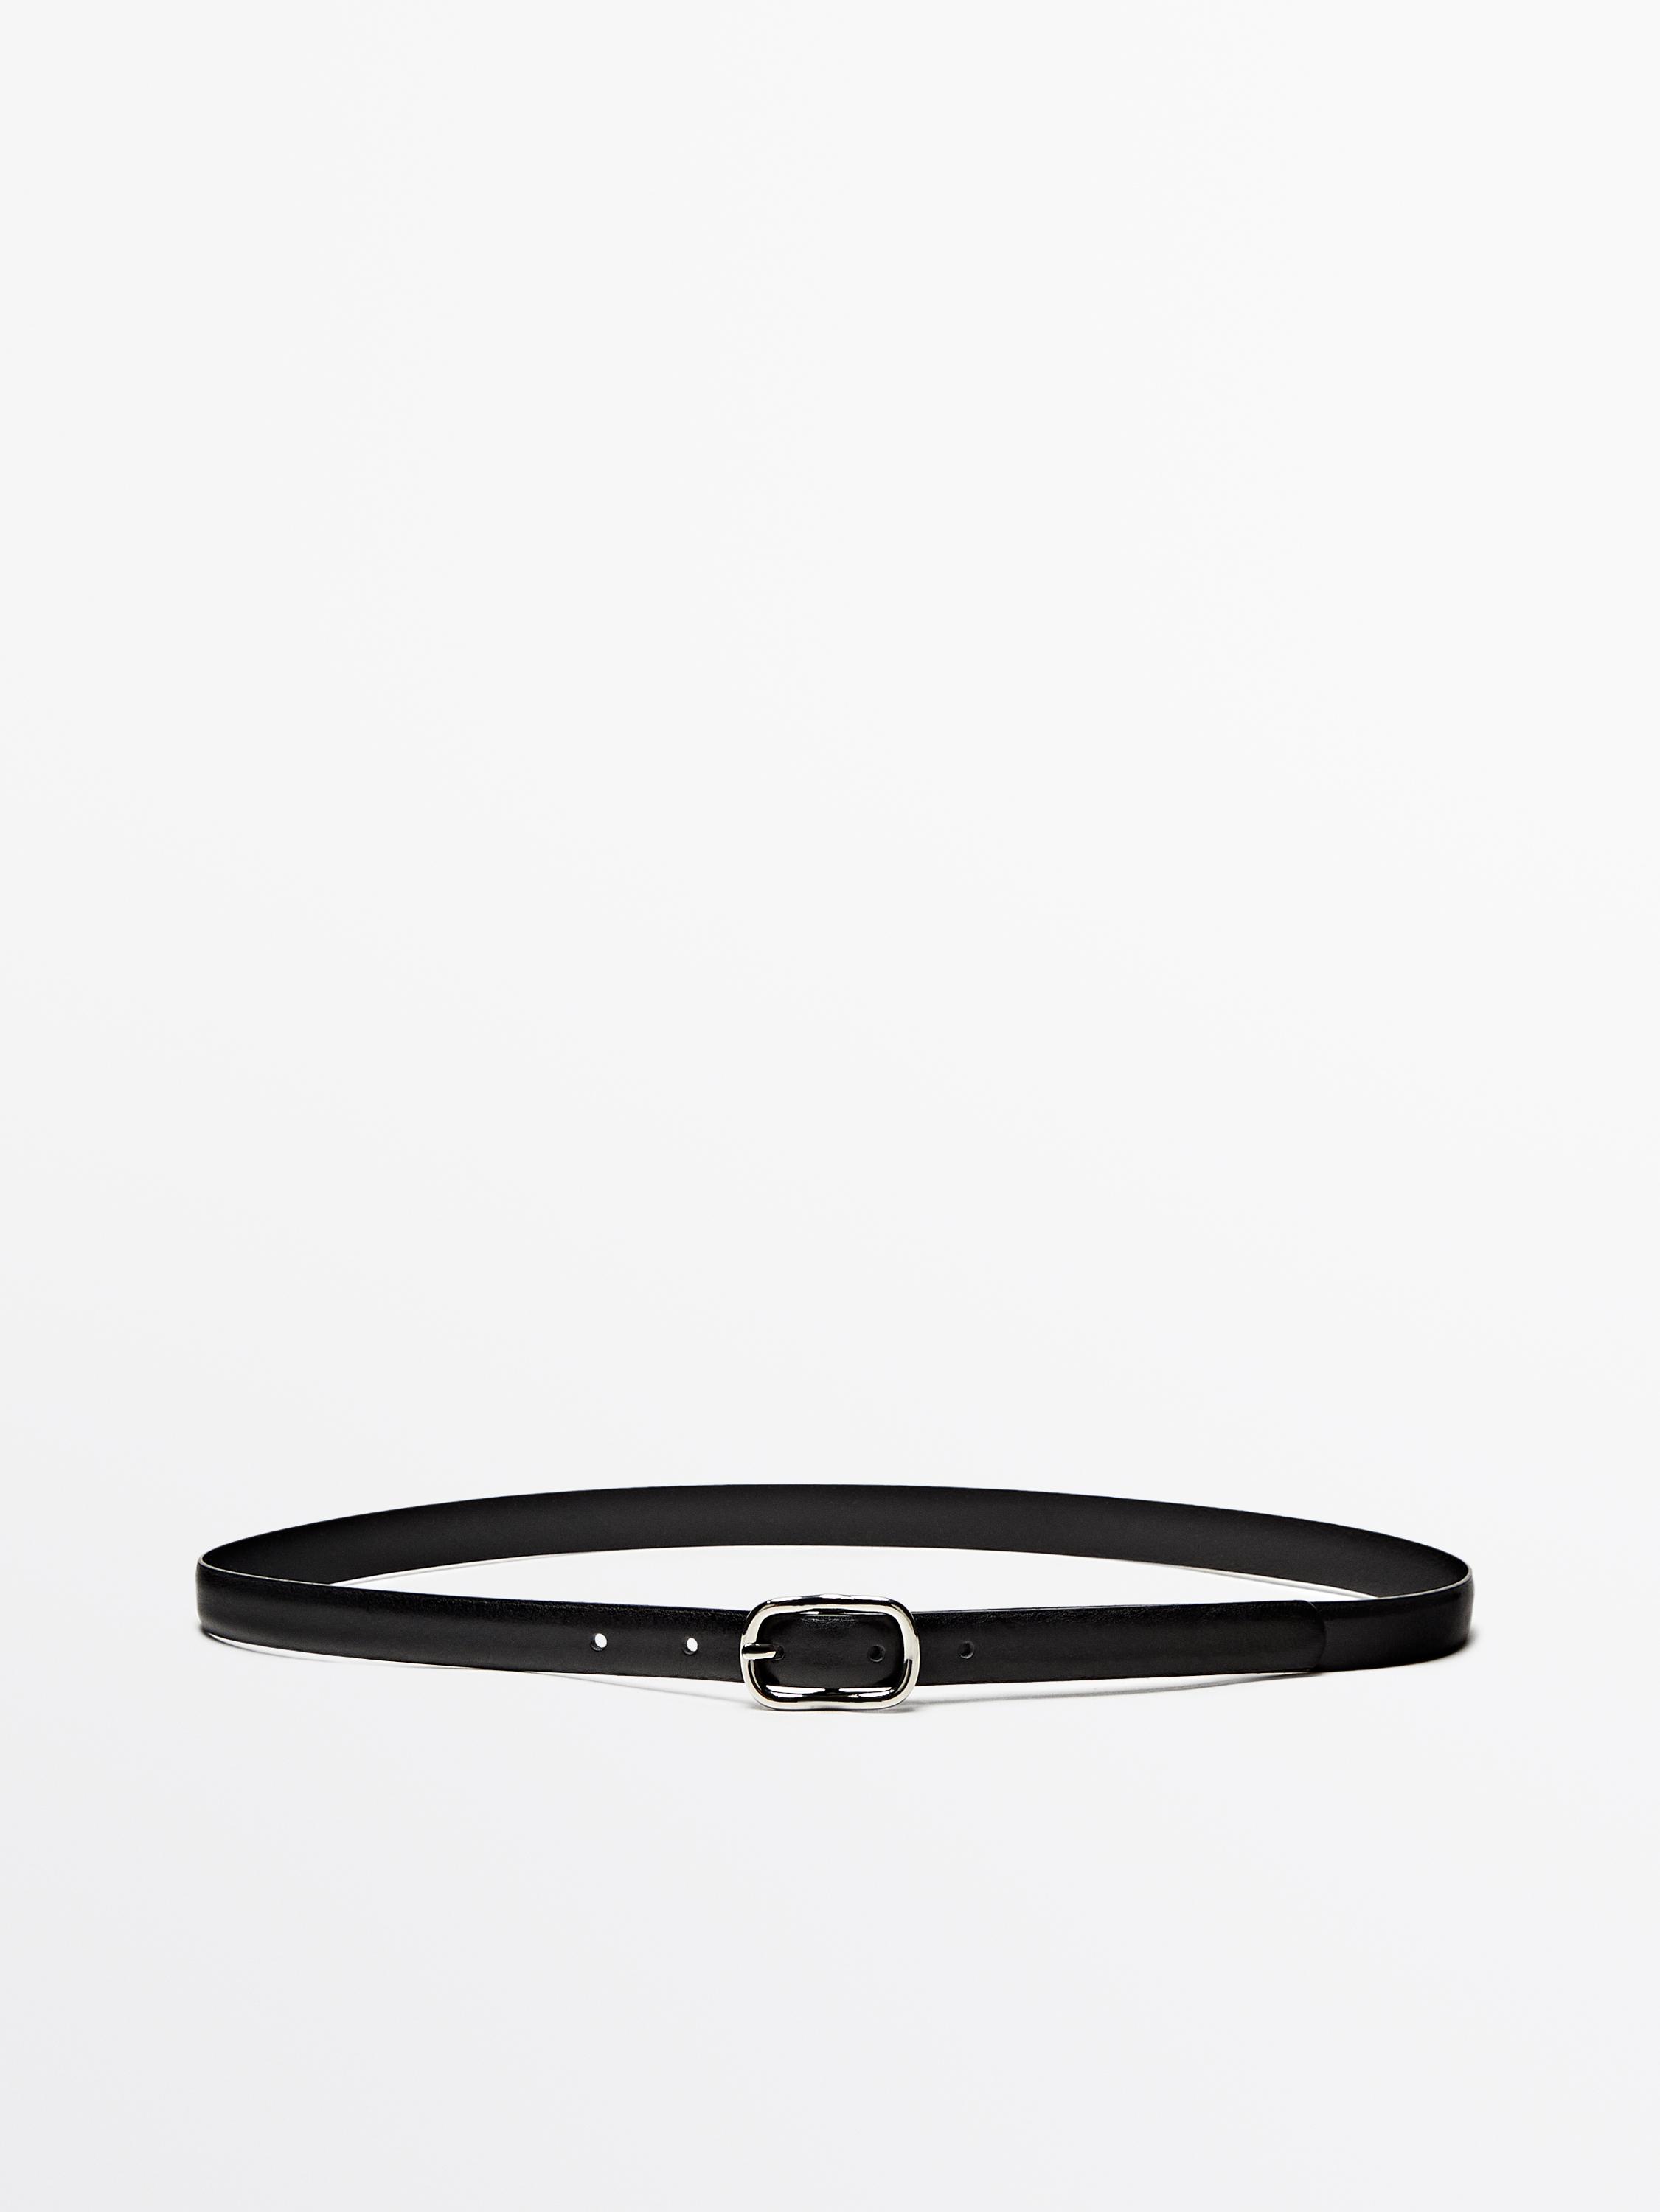 Leather belt with an oval buckle - Black | ZARA Canada